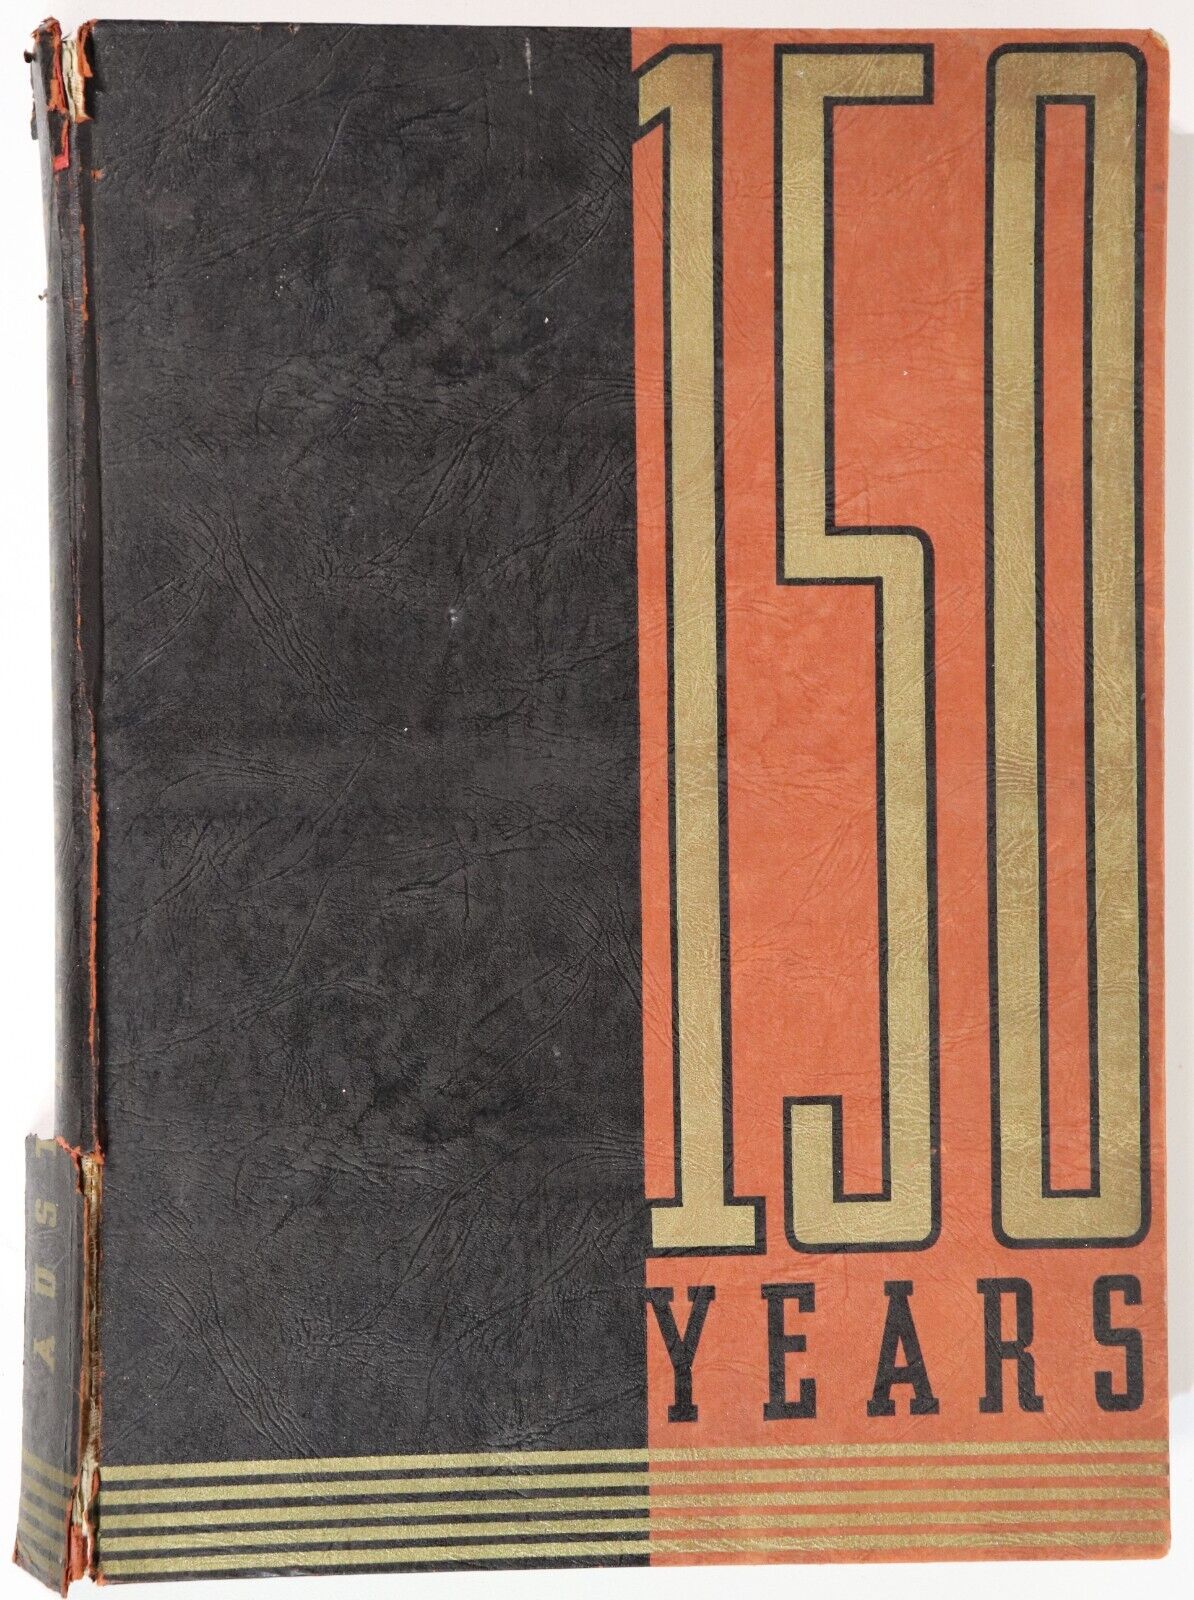 Australia: 1788 to 1938 - 150 Years Celebration - Australian History Book